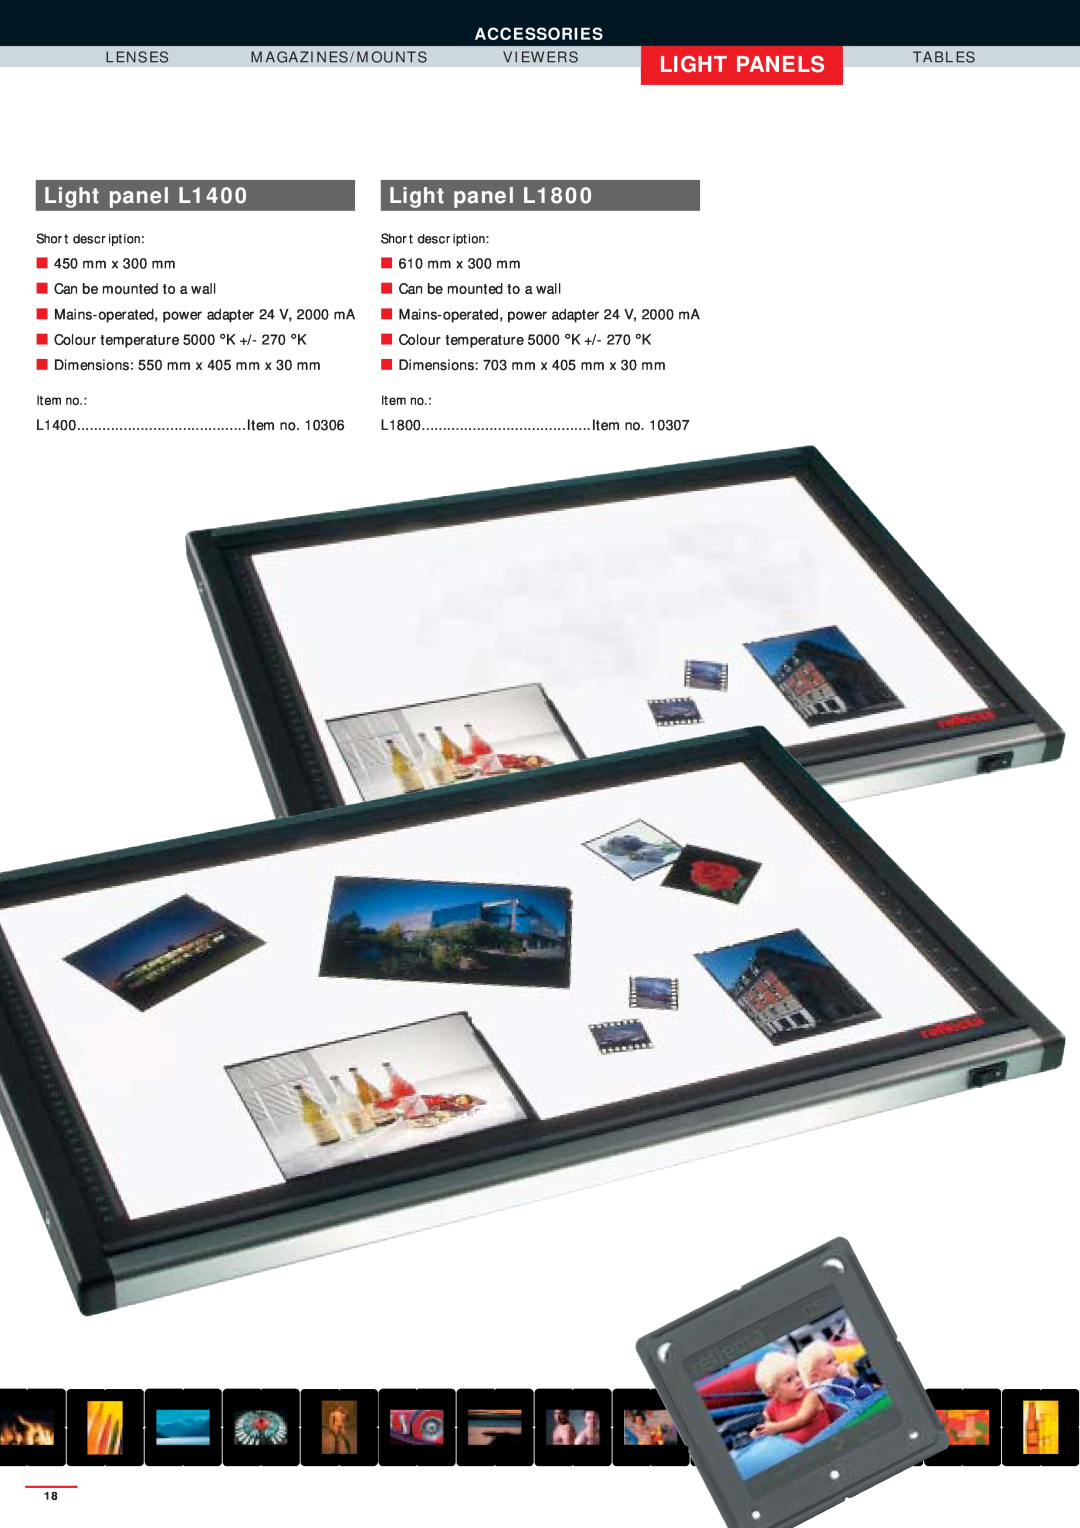 Reflecta SERIES 3000 manual Light Panels, Light panel L1400, Light panel L1800, L E N S E S, T A B L E S, Accessories 